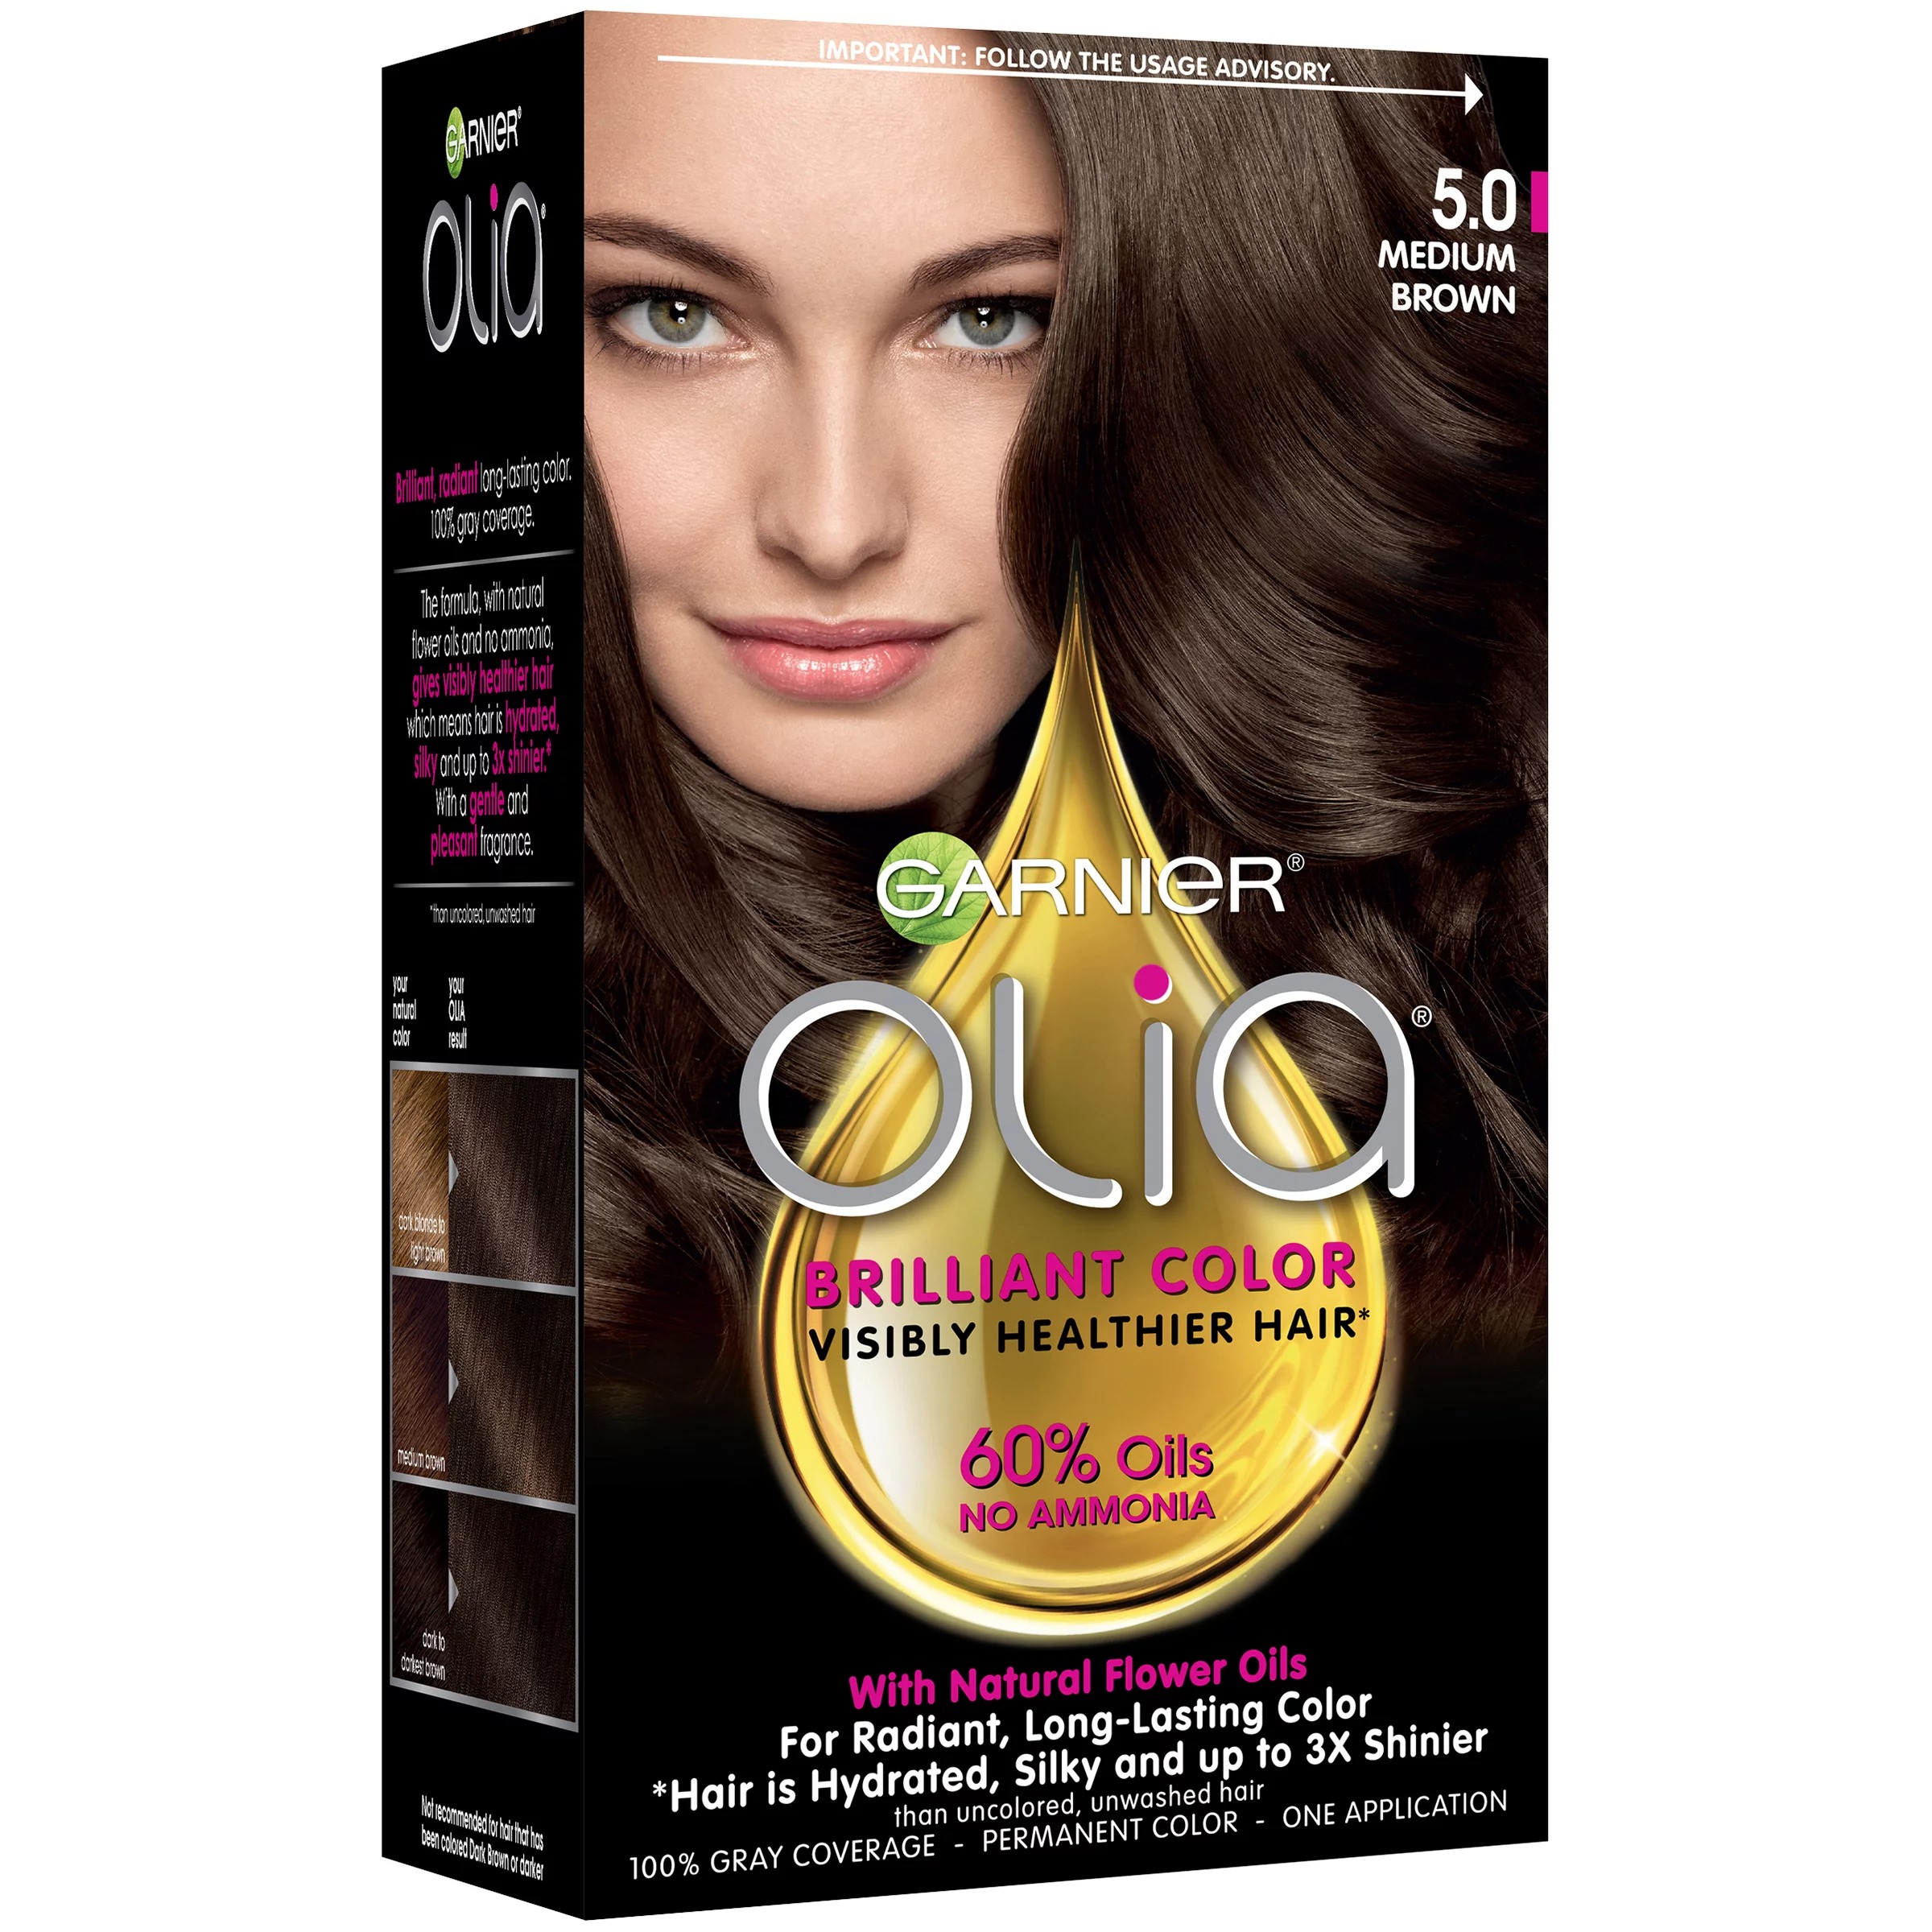 Da ngăm Thuốc nhuộm tóc Garnier Olia Oil Powered Permanent Hair Color Màu 5.0 - Medium Brown.